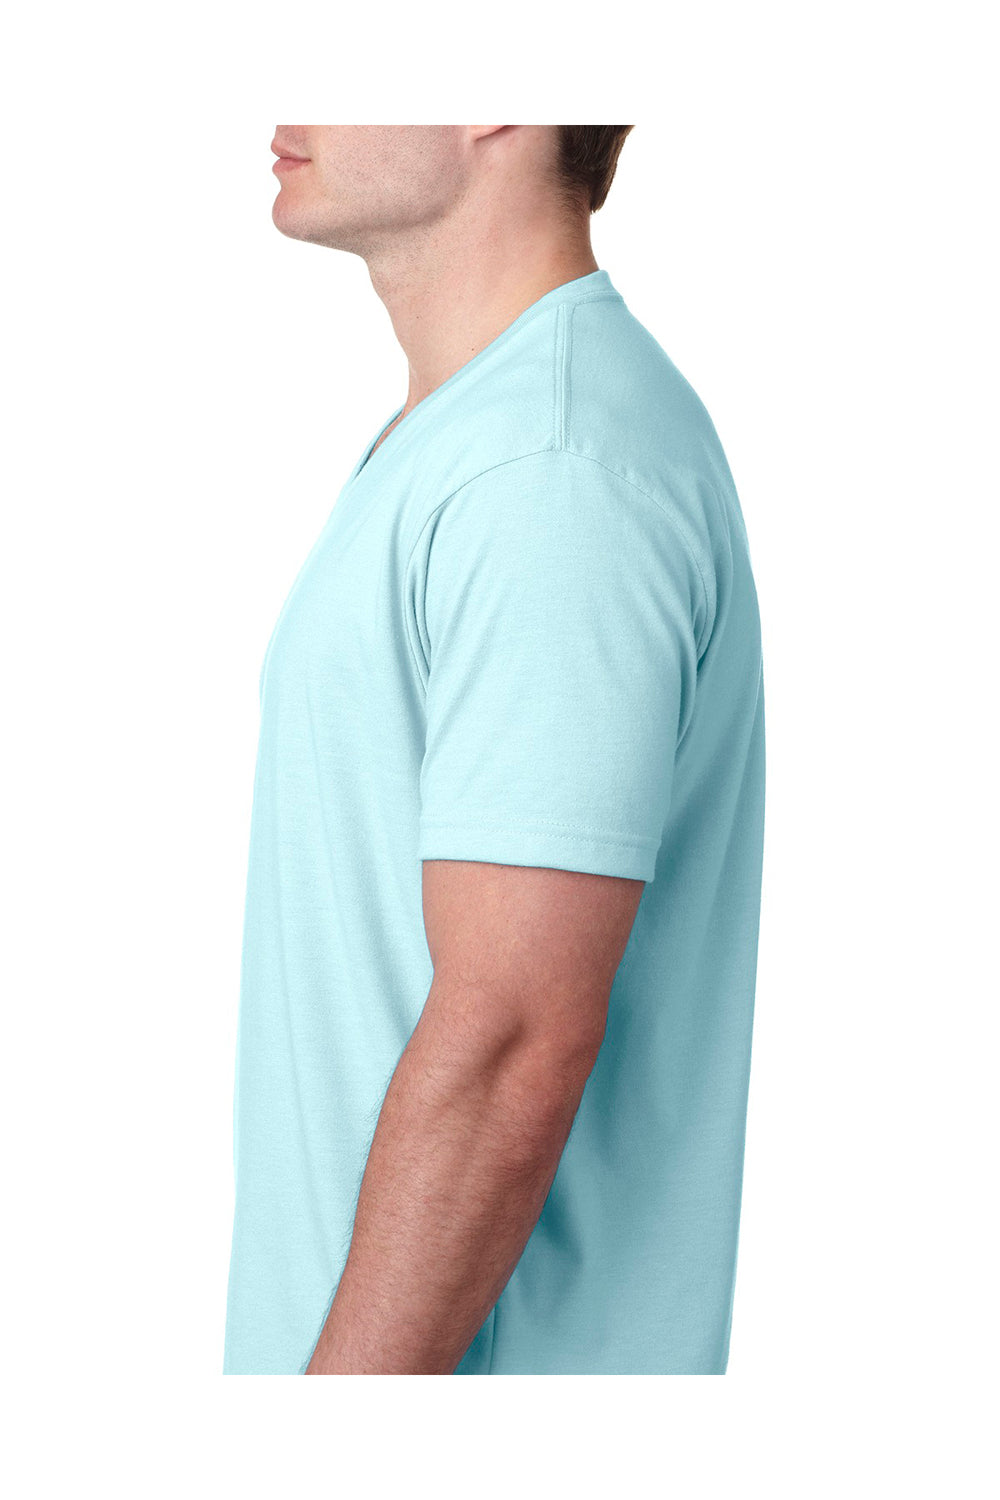 Next Level 6240 Mens CVC Jersey Short Sleeve V-Neck T-Shirt Ice Blue Side